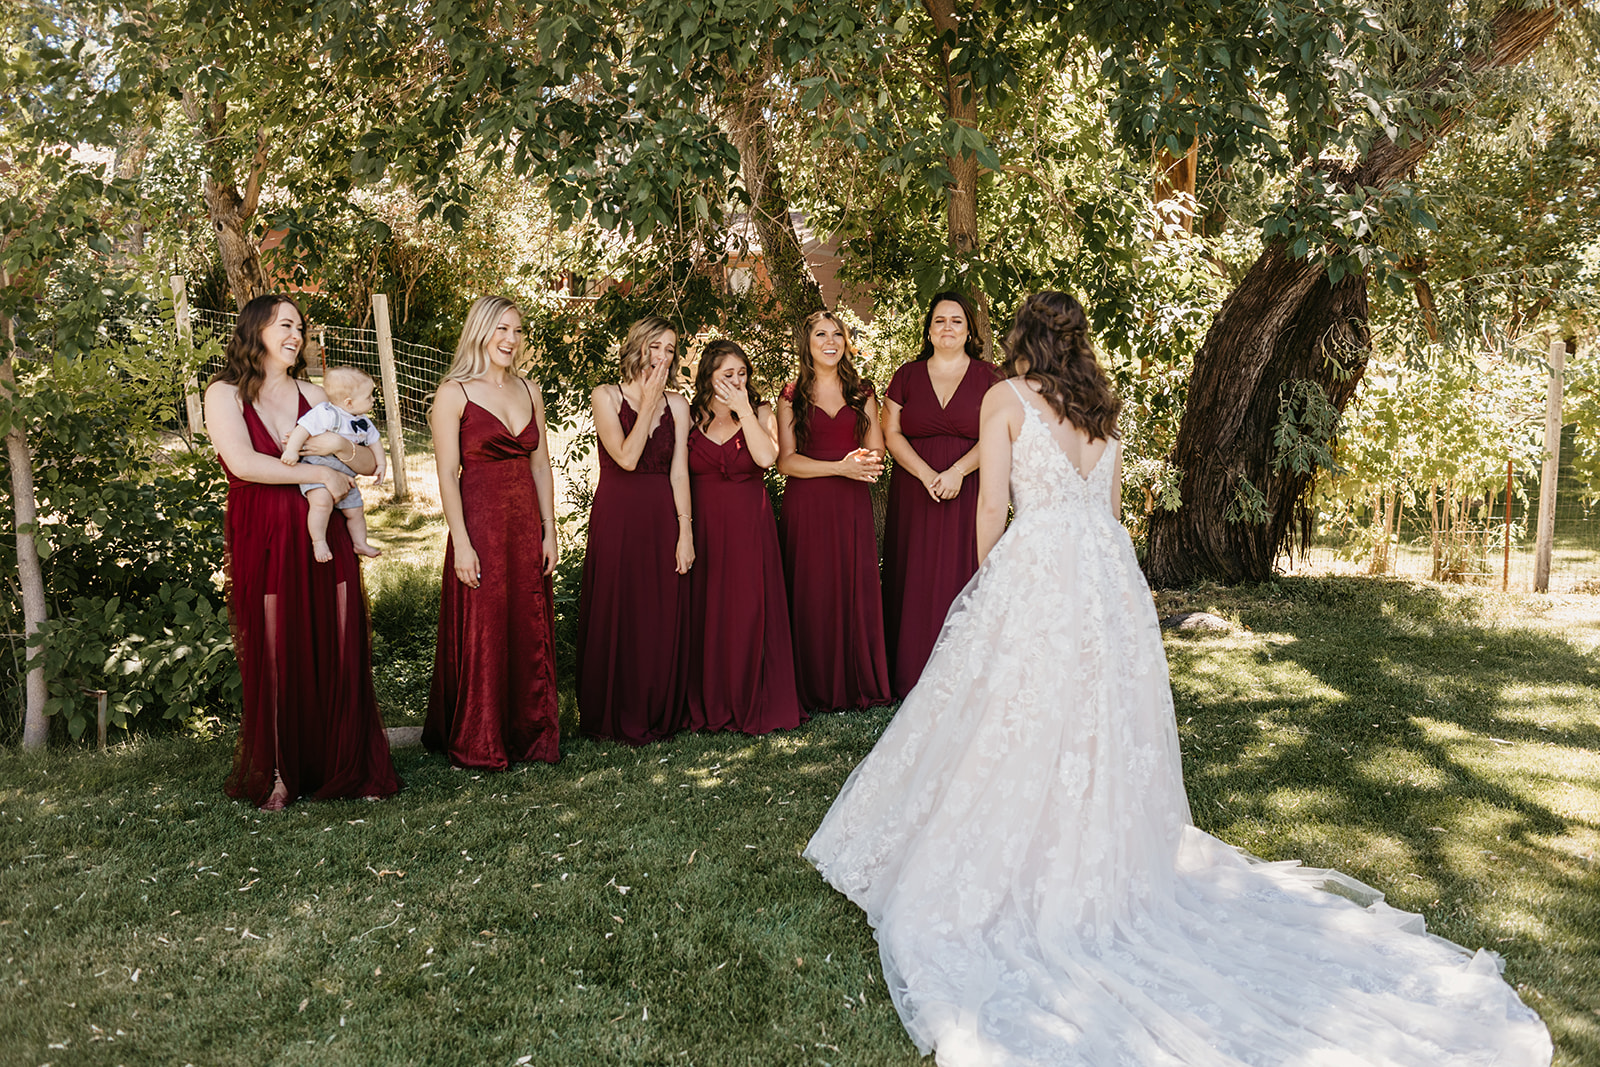 Bride revealing her wedding dress to her bridesmaids